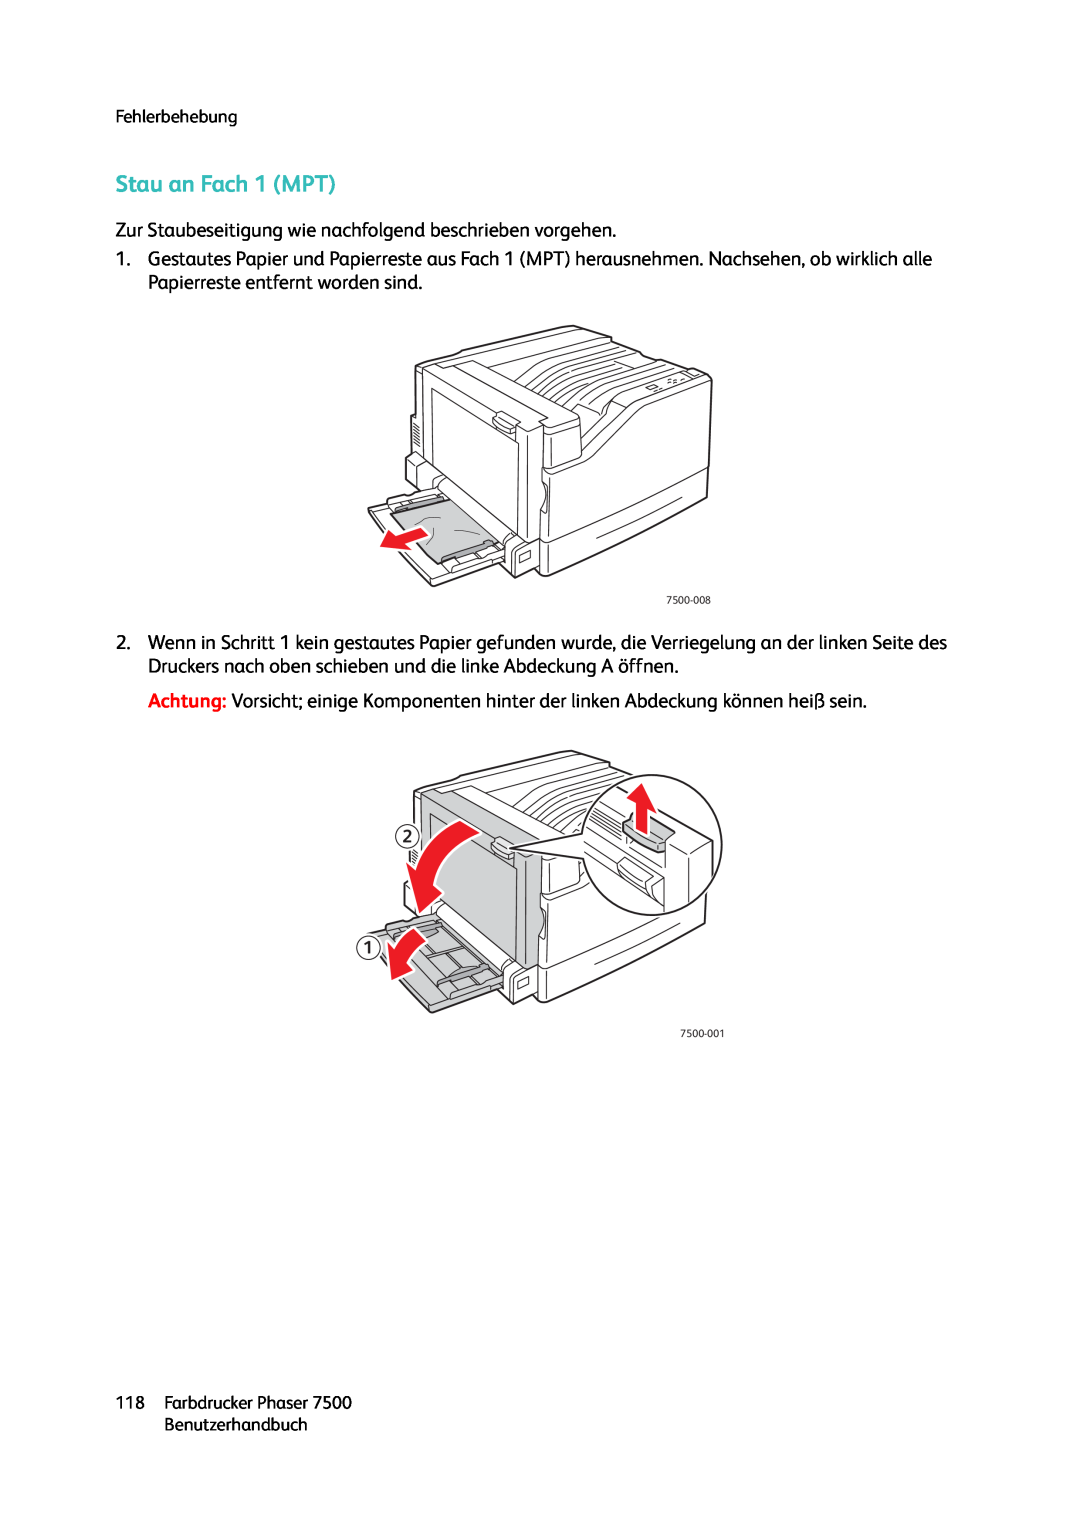 Xerox 7500 color printer manual Stau an Fach 1 MPT, Fehlerbehebung, 118Farbdrucker Phaser 7500 Benutzerhandbuch 